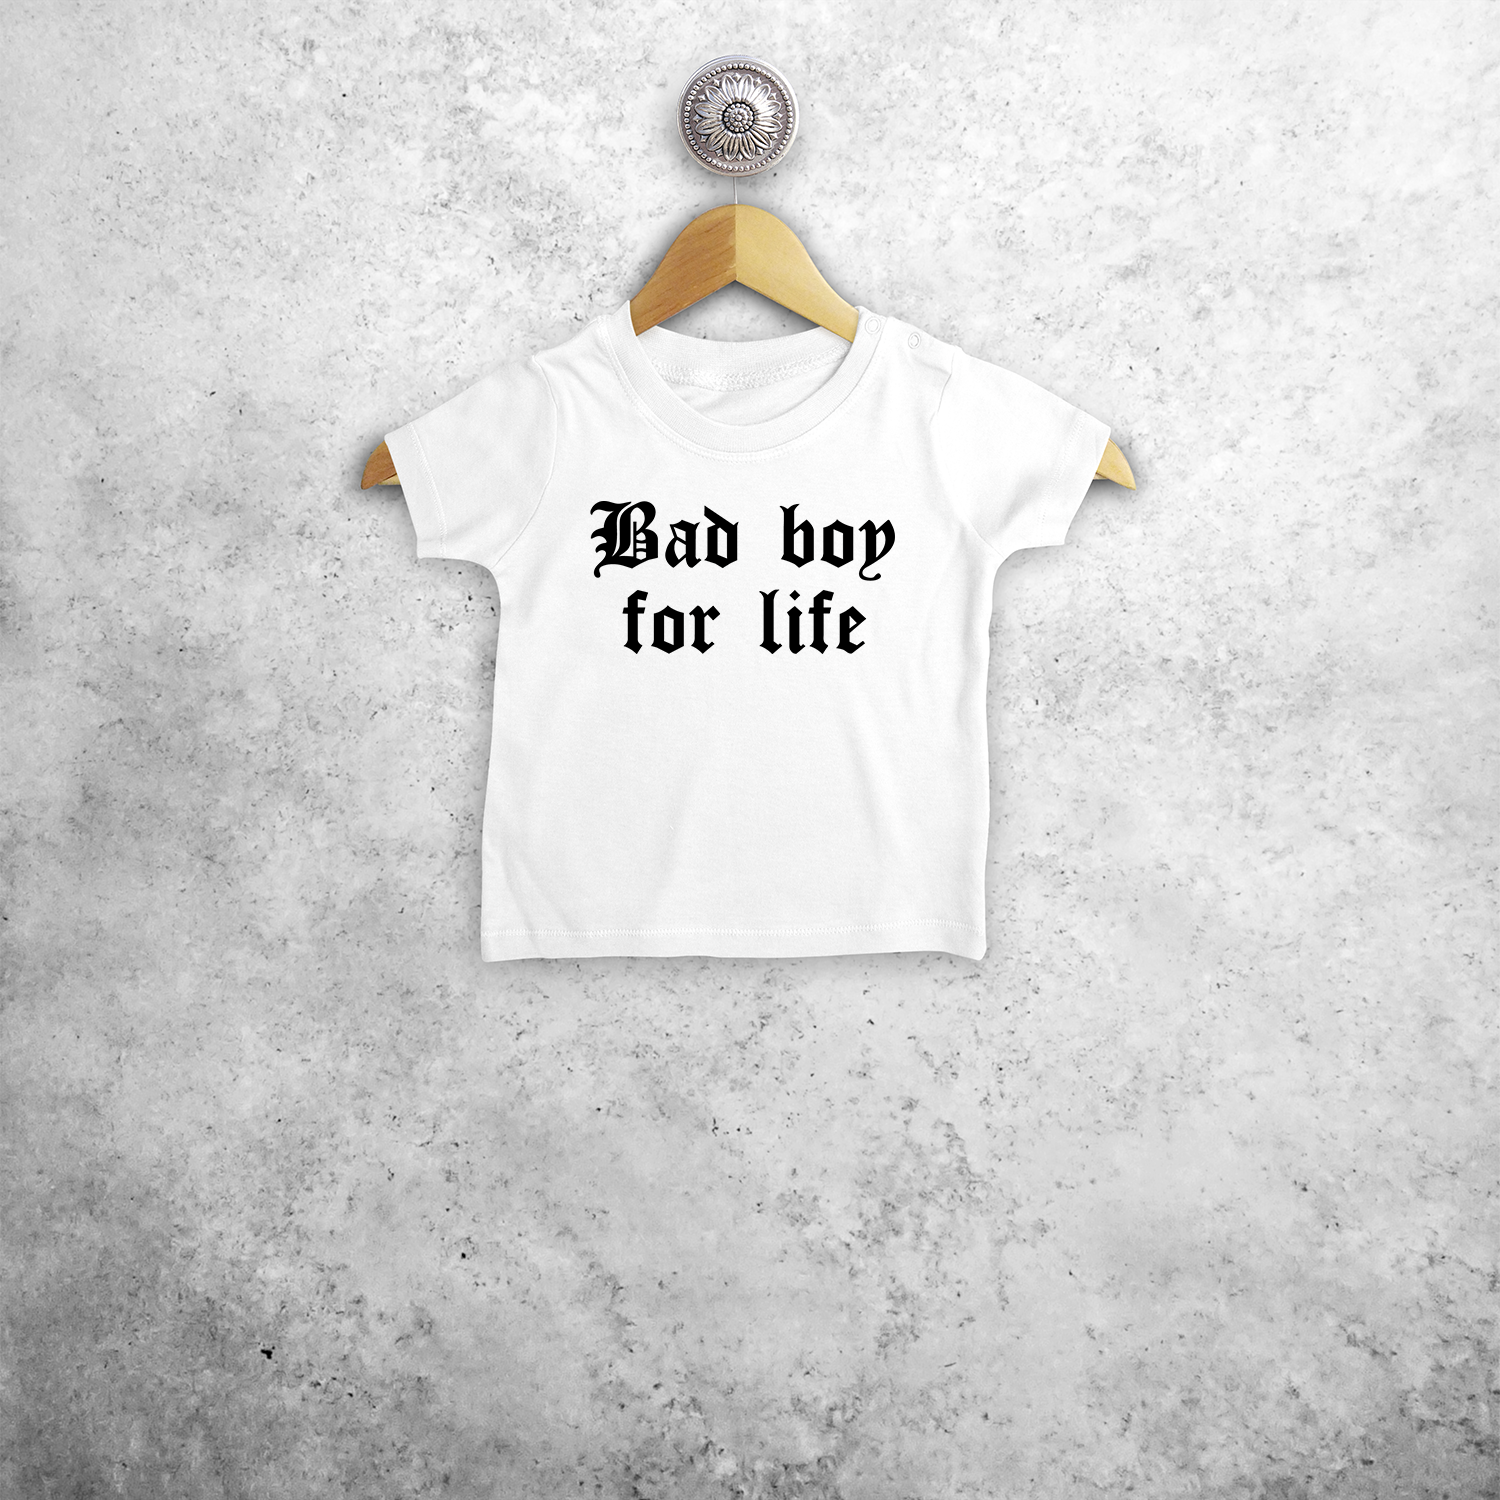 'Bad boy for life' baby shortsleeve shirt